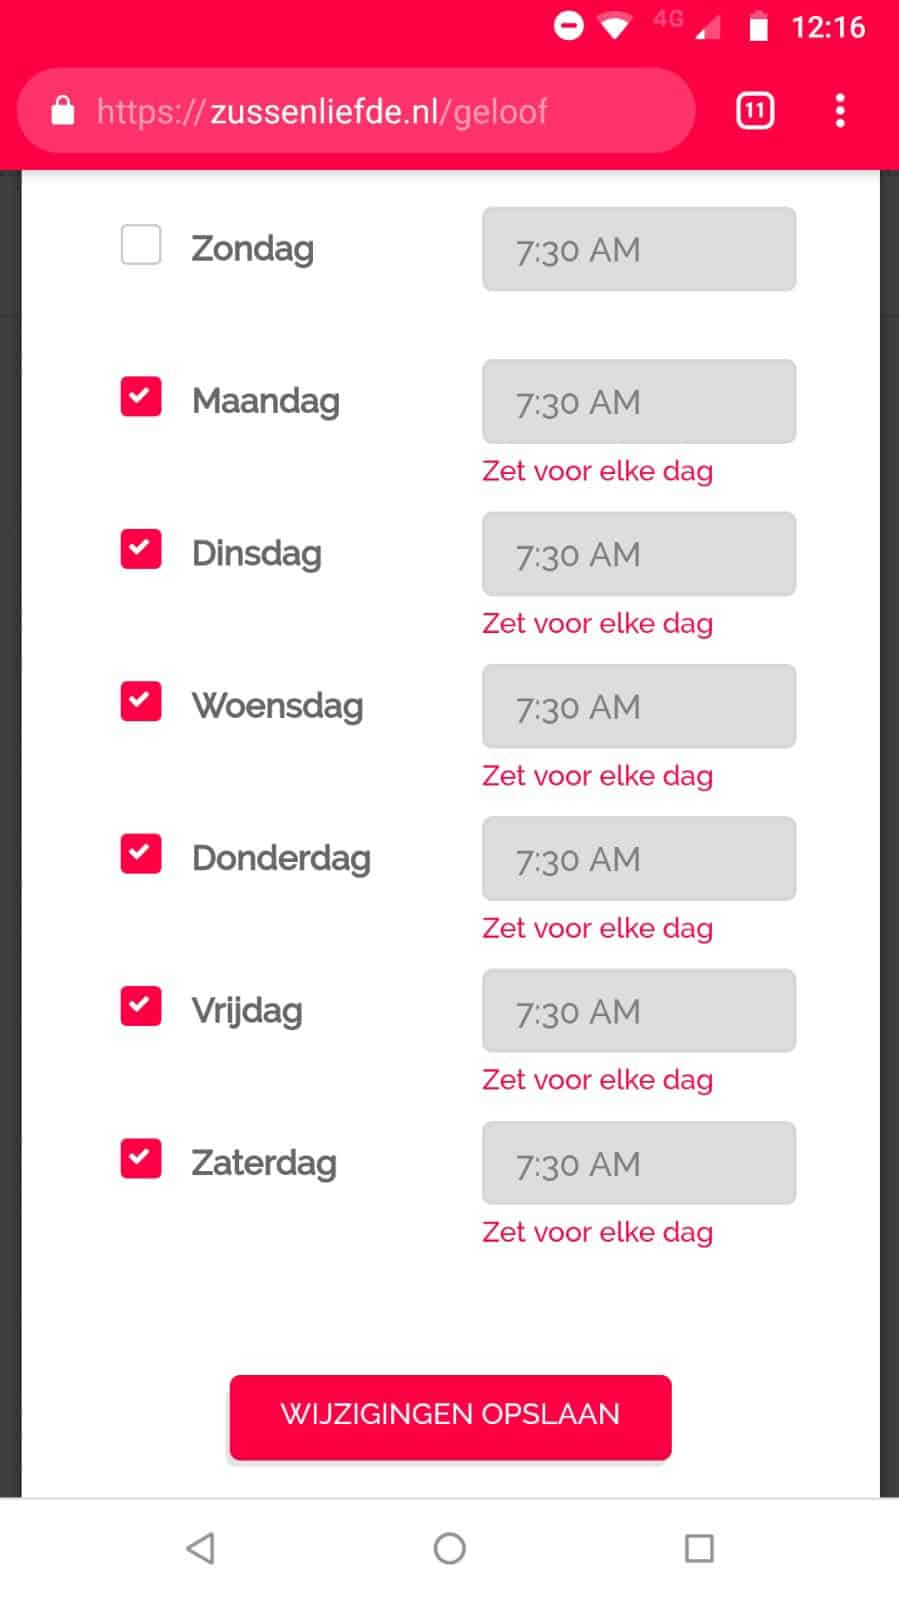 //zussenliefde.nl/app/uploads/2019/01/android-zl-not-3.jpg